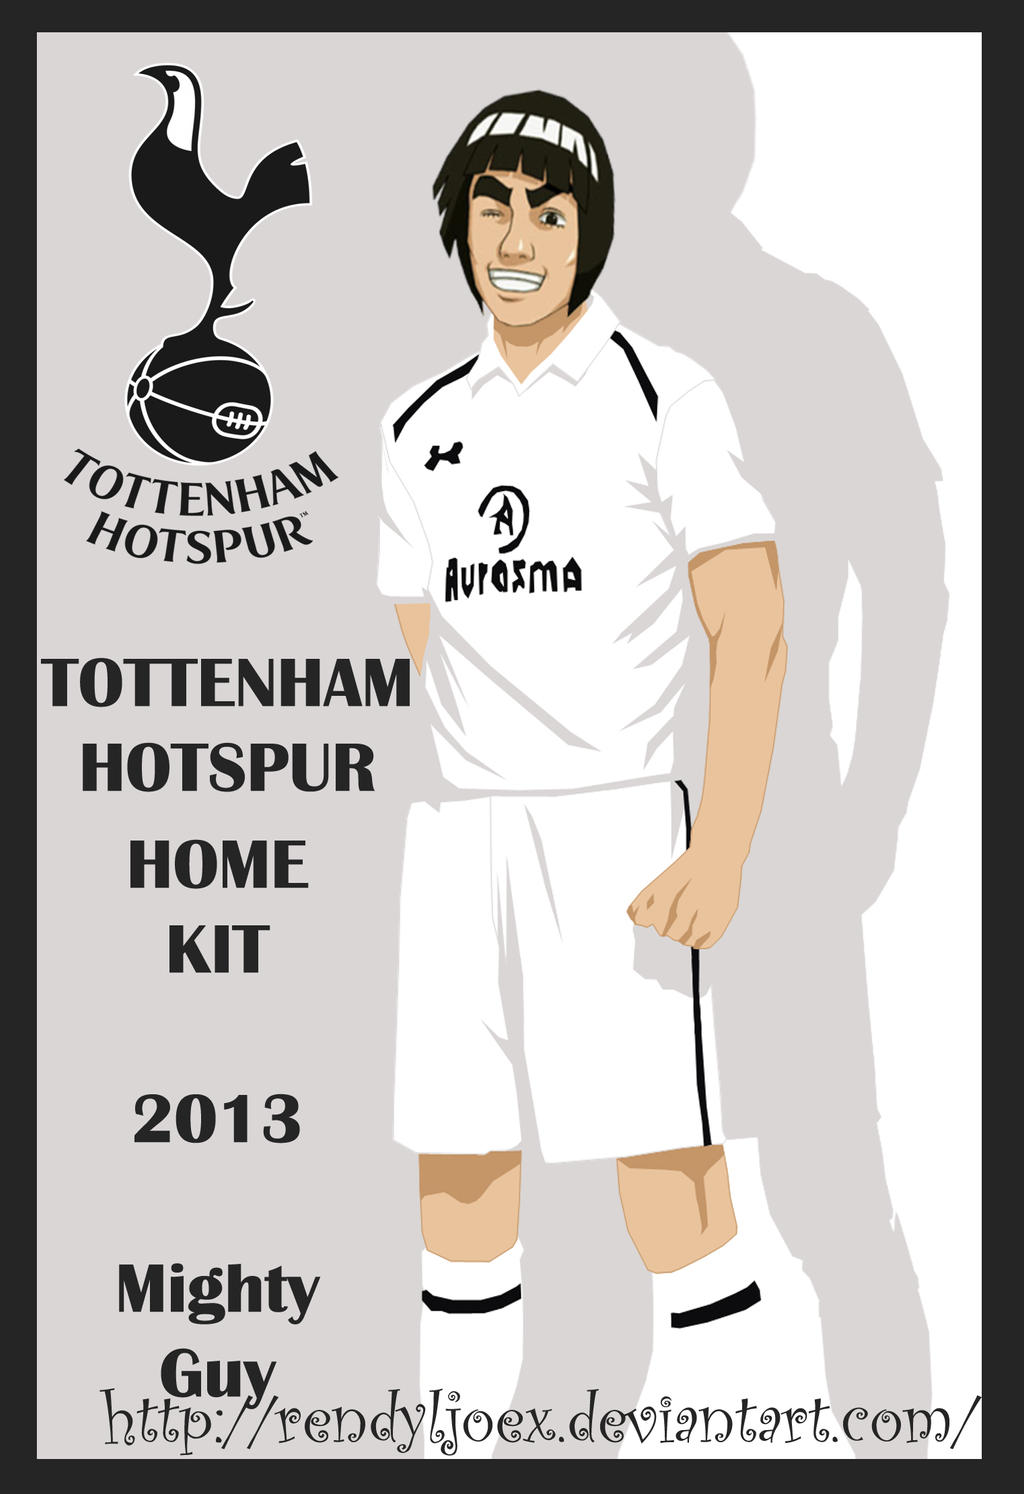 Guy Tottenham Hotspurs Home Kit 2012 - 2013